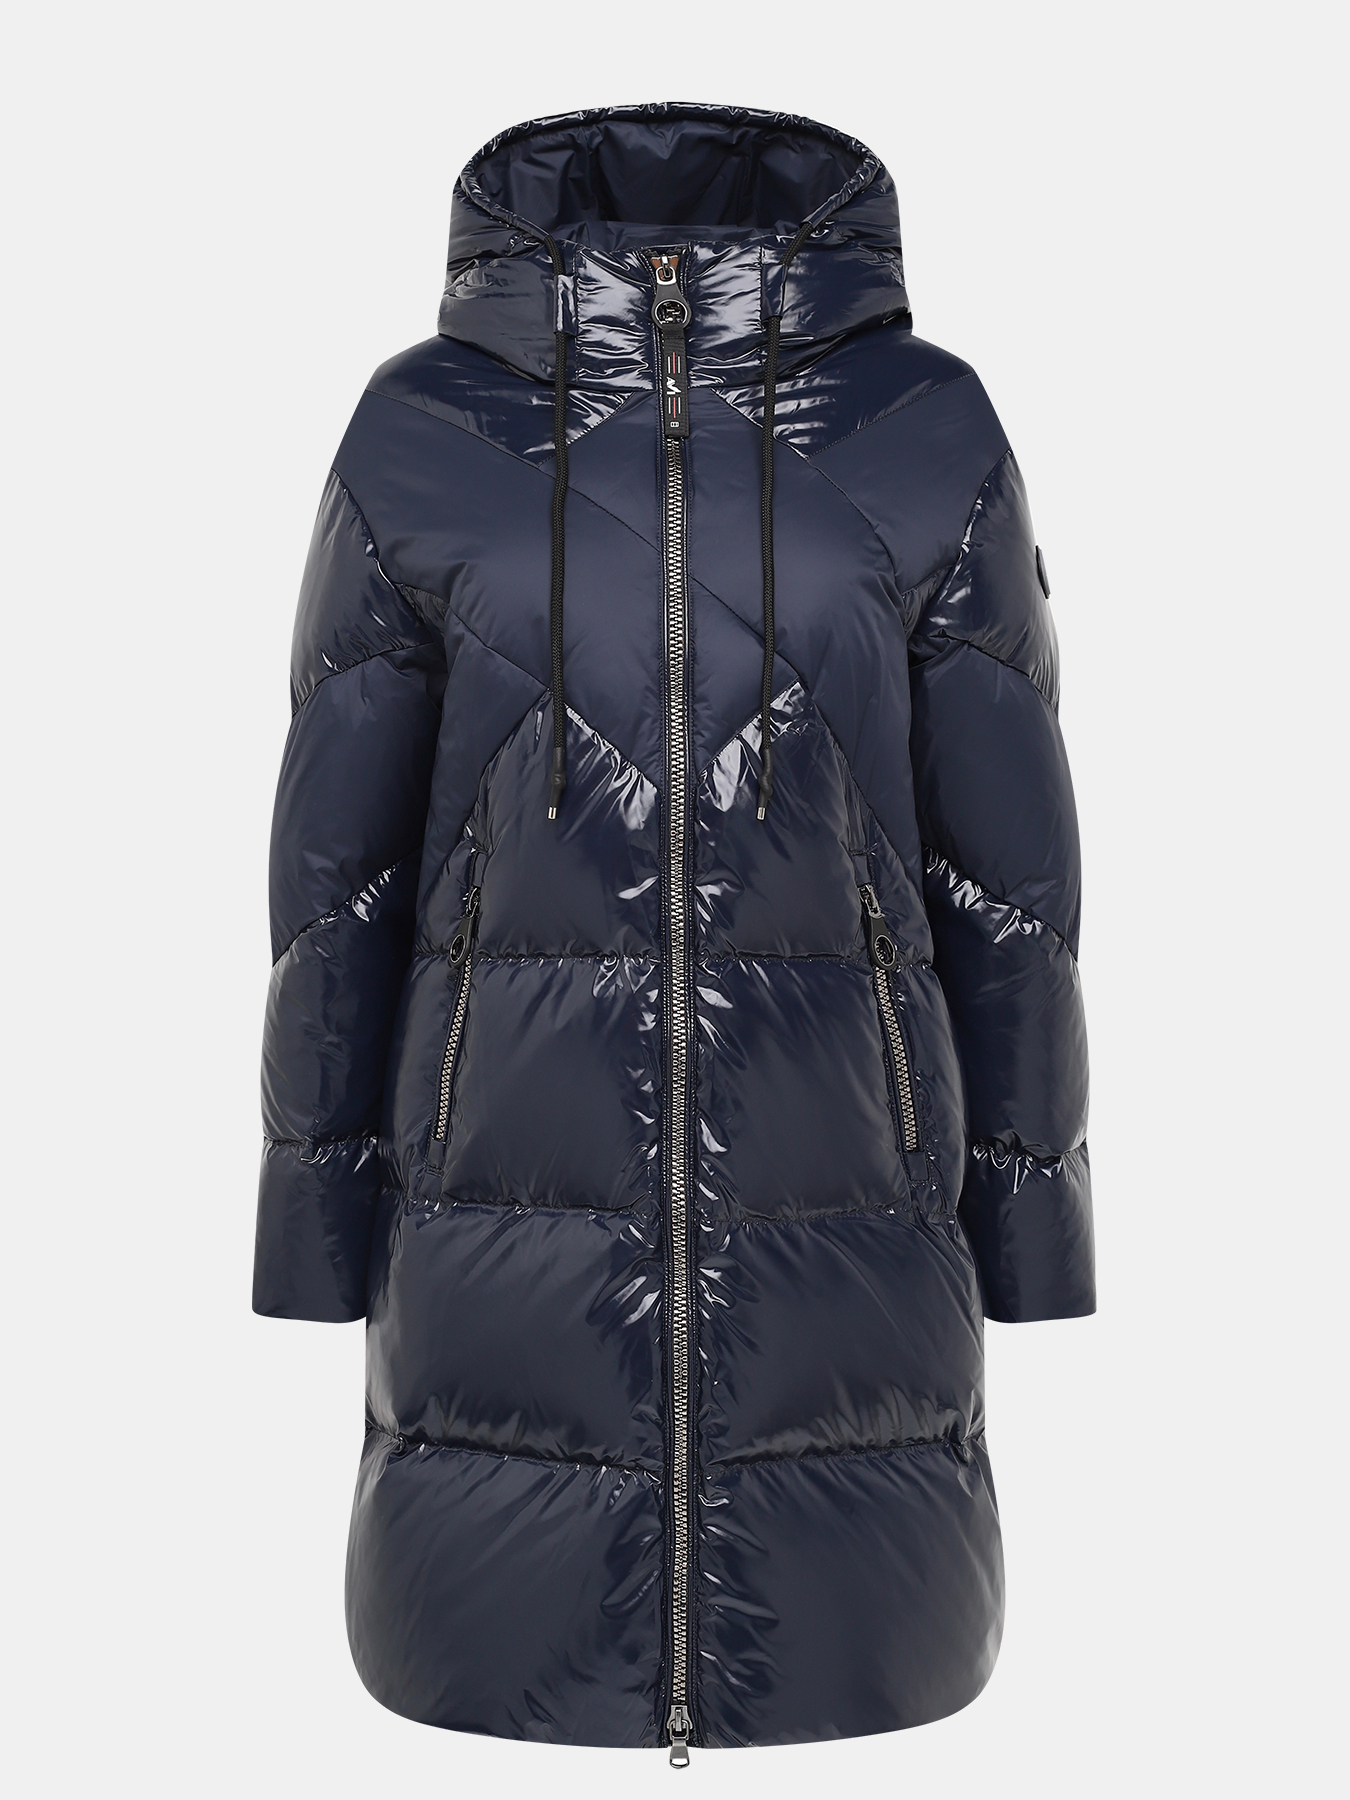 Пальто зимнее AVI 433522-024, цвет темно-синий, размер 52